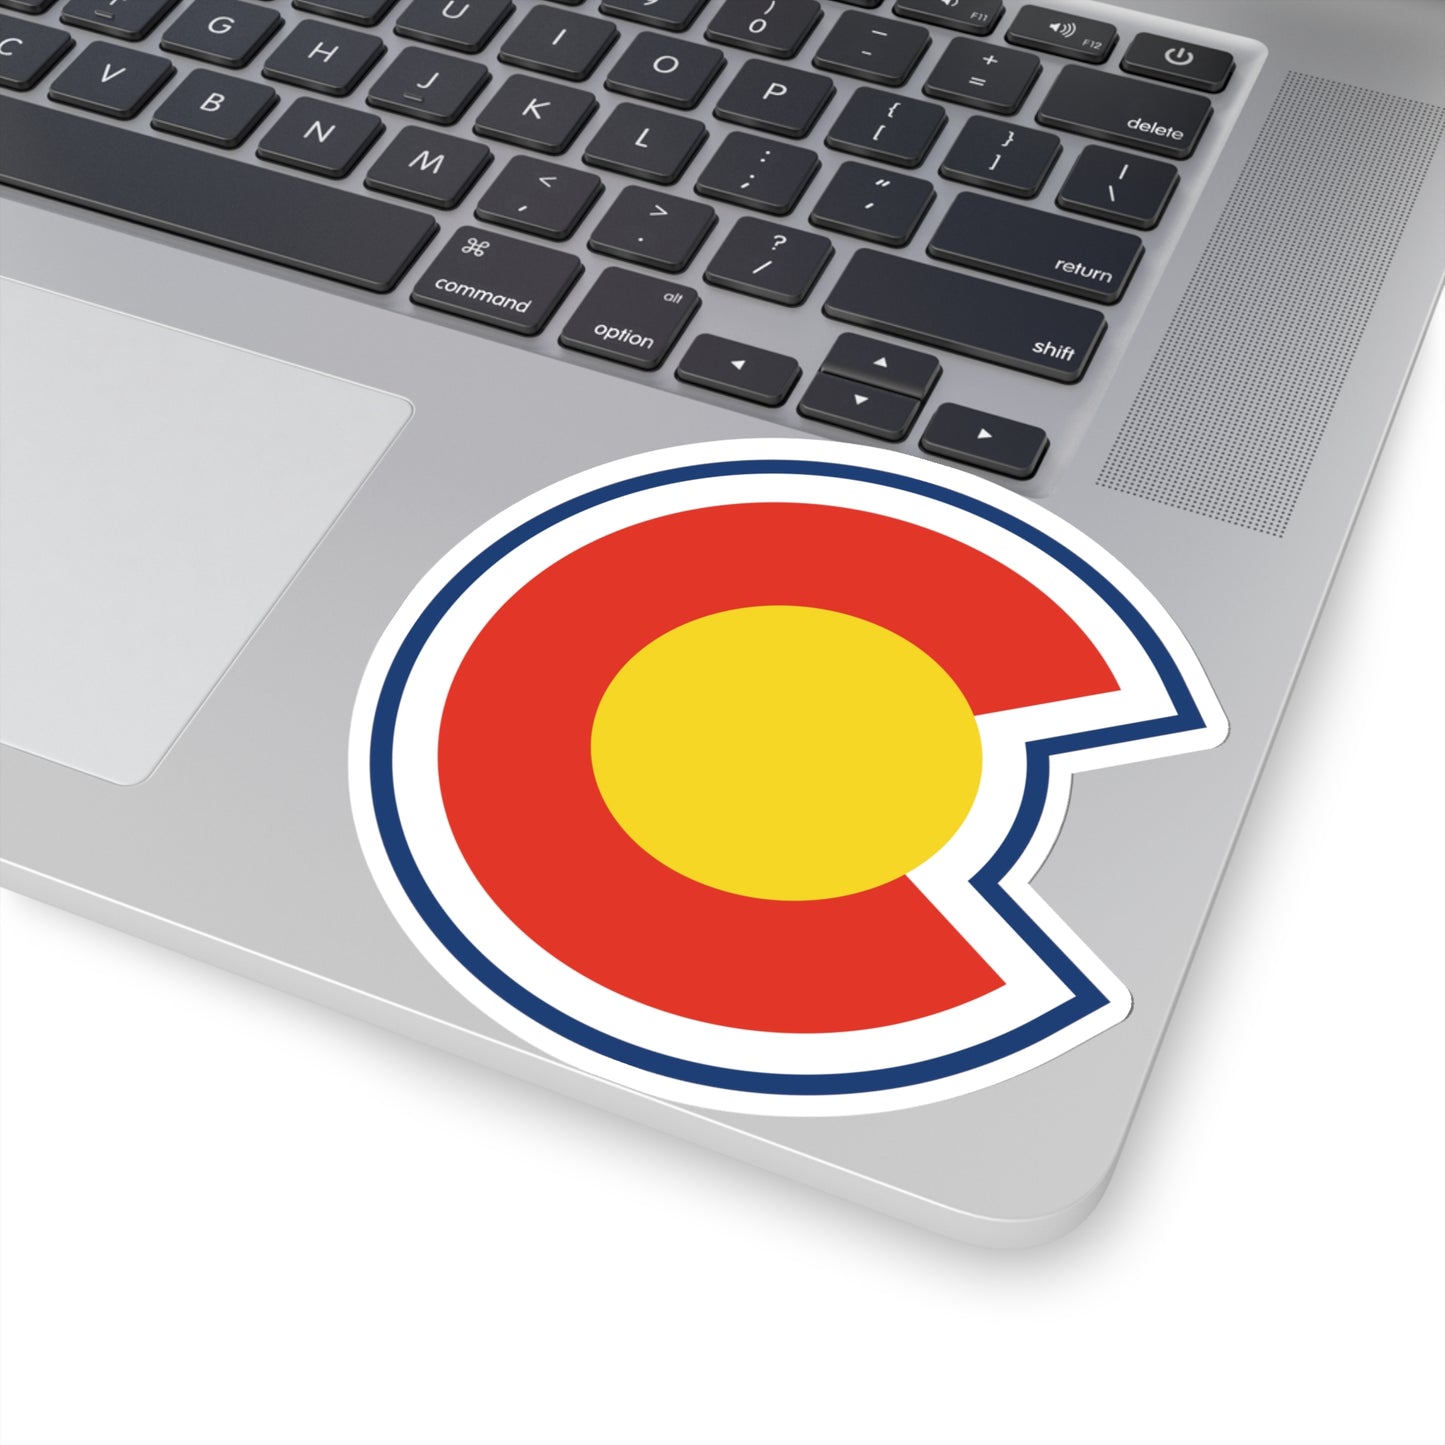 Colorado C Sticker